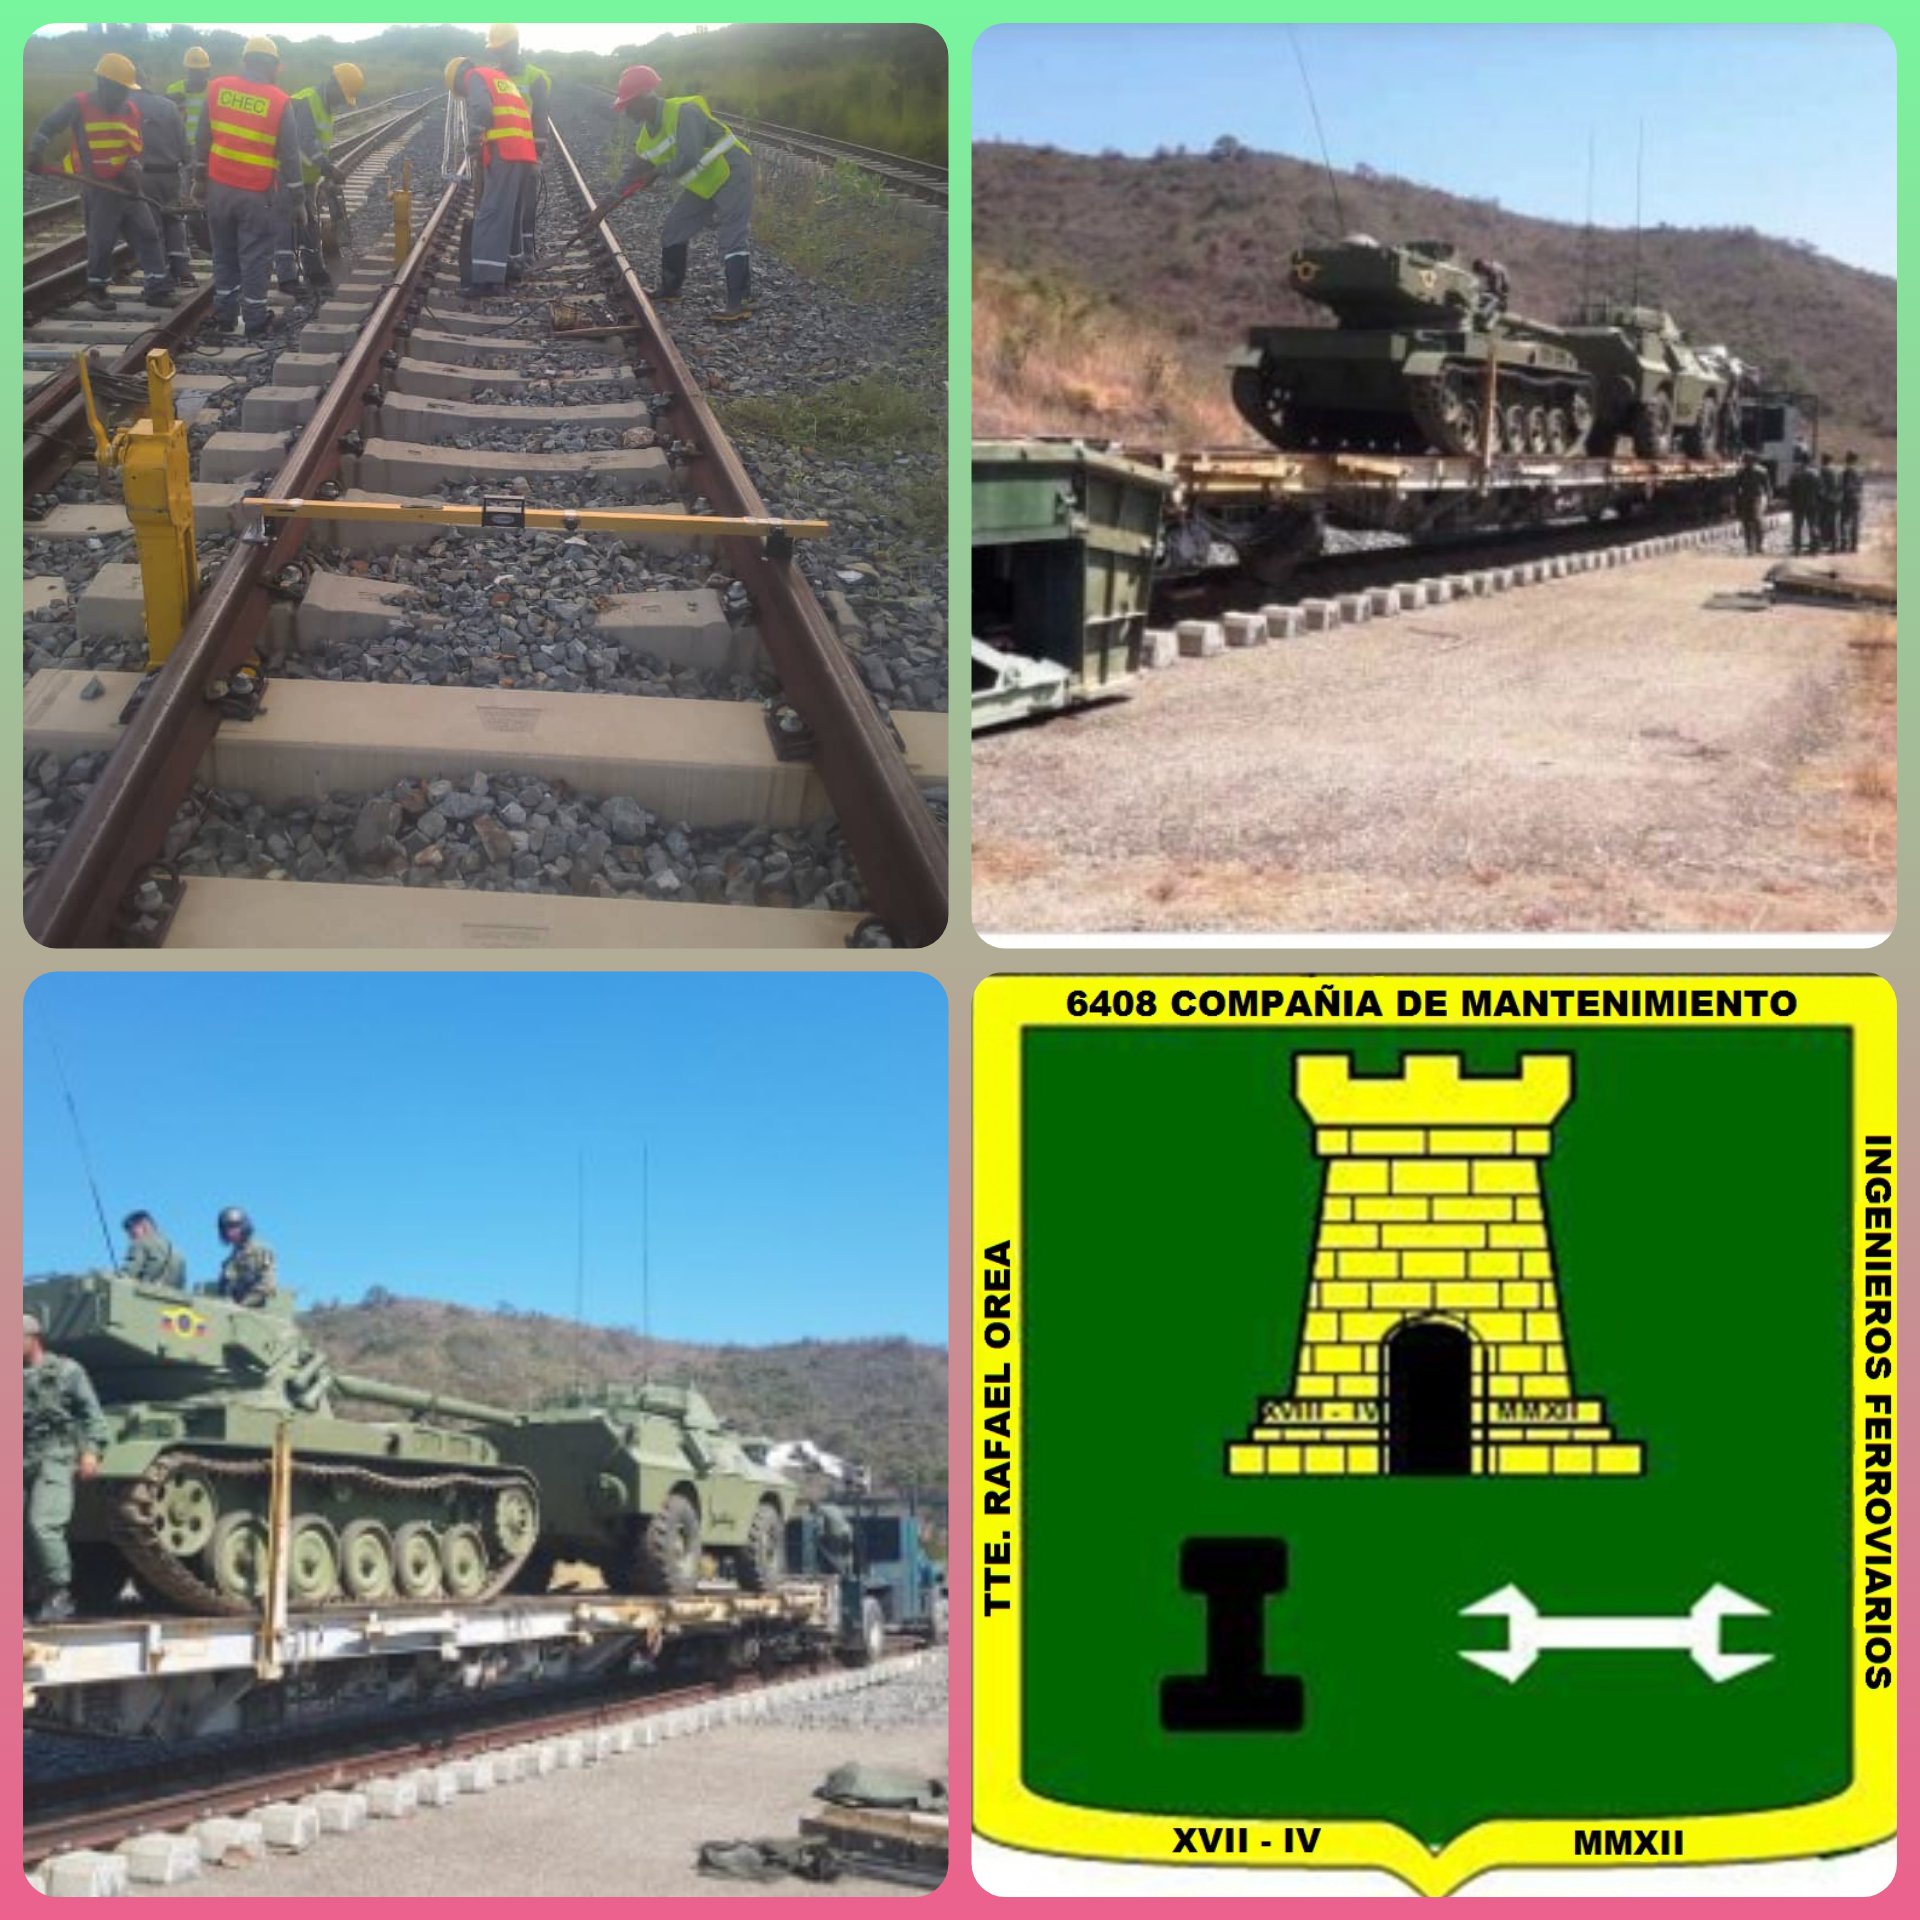 Ingeniería Militar del Ejército Bolivariano Eiiva0GWAAIuZHq?format=jpg&name=large